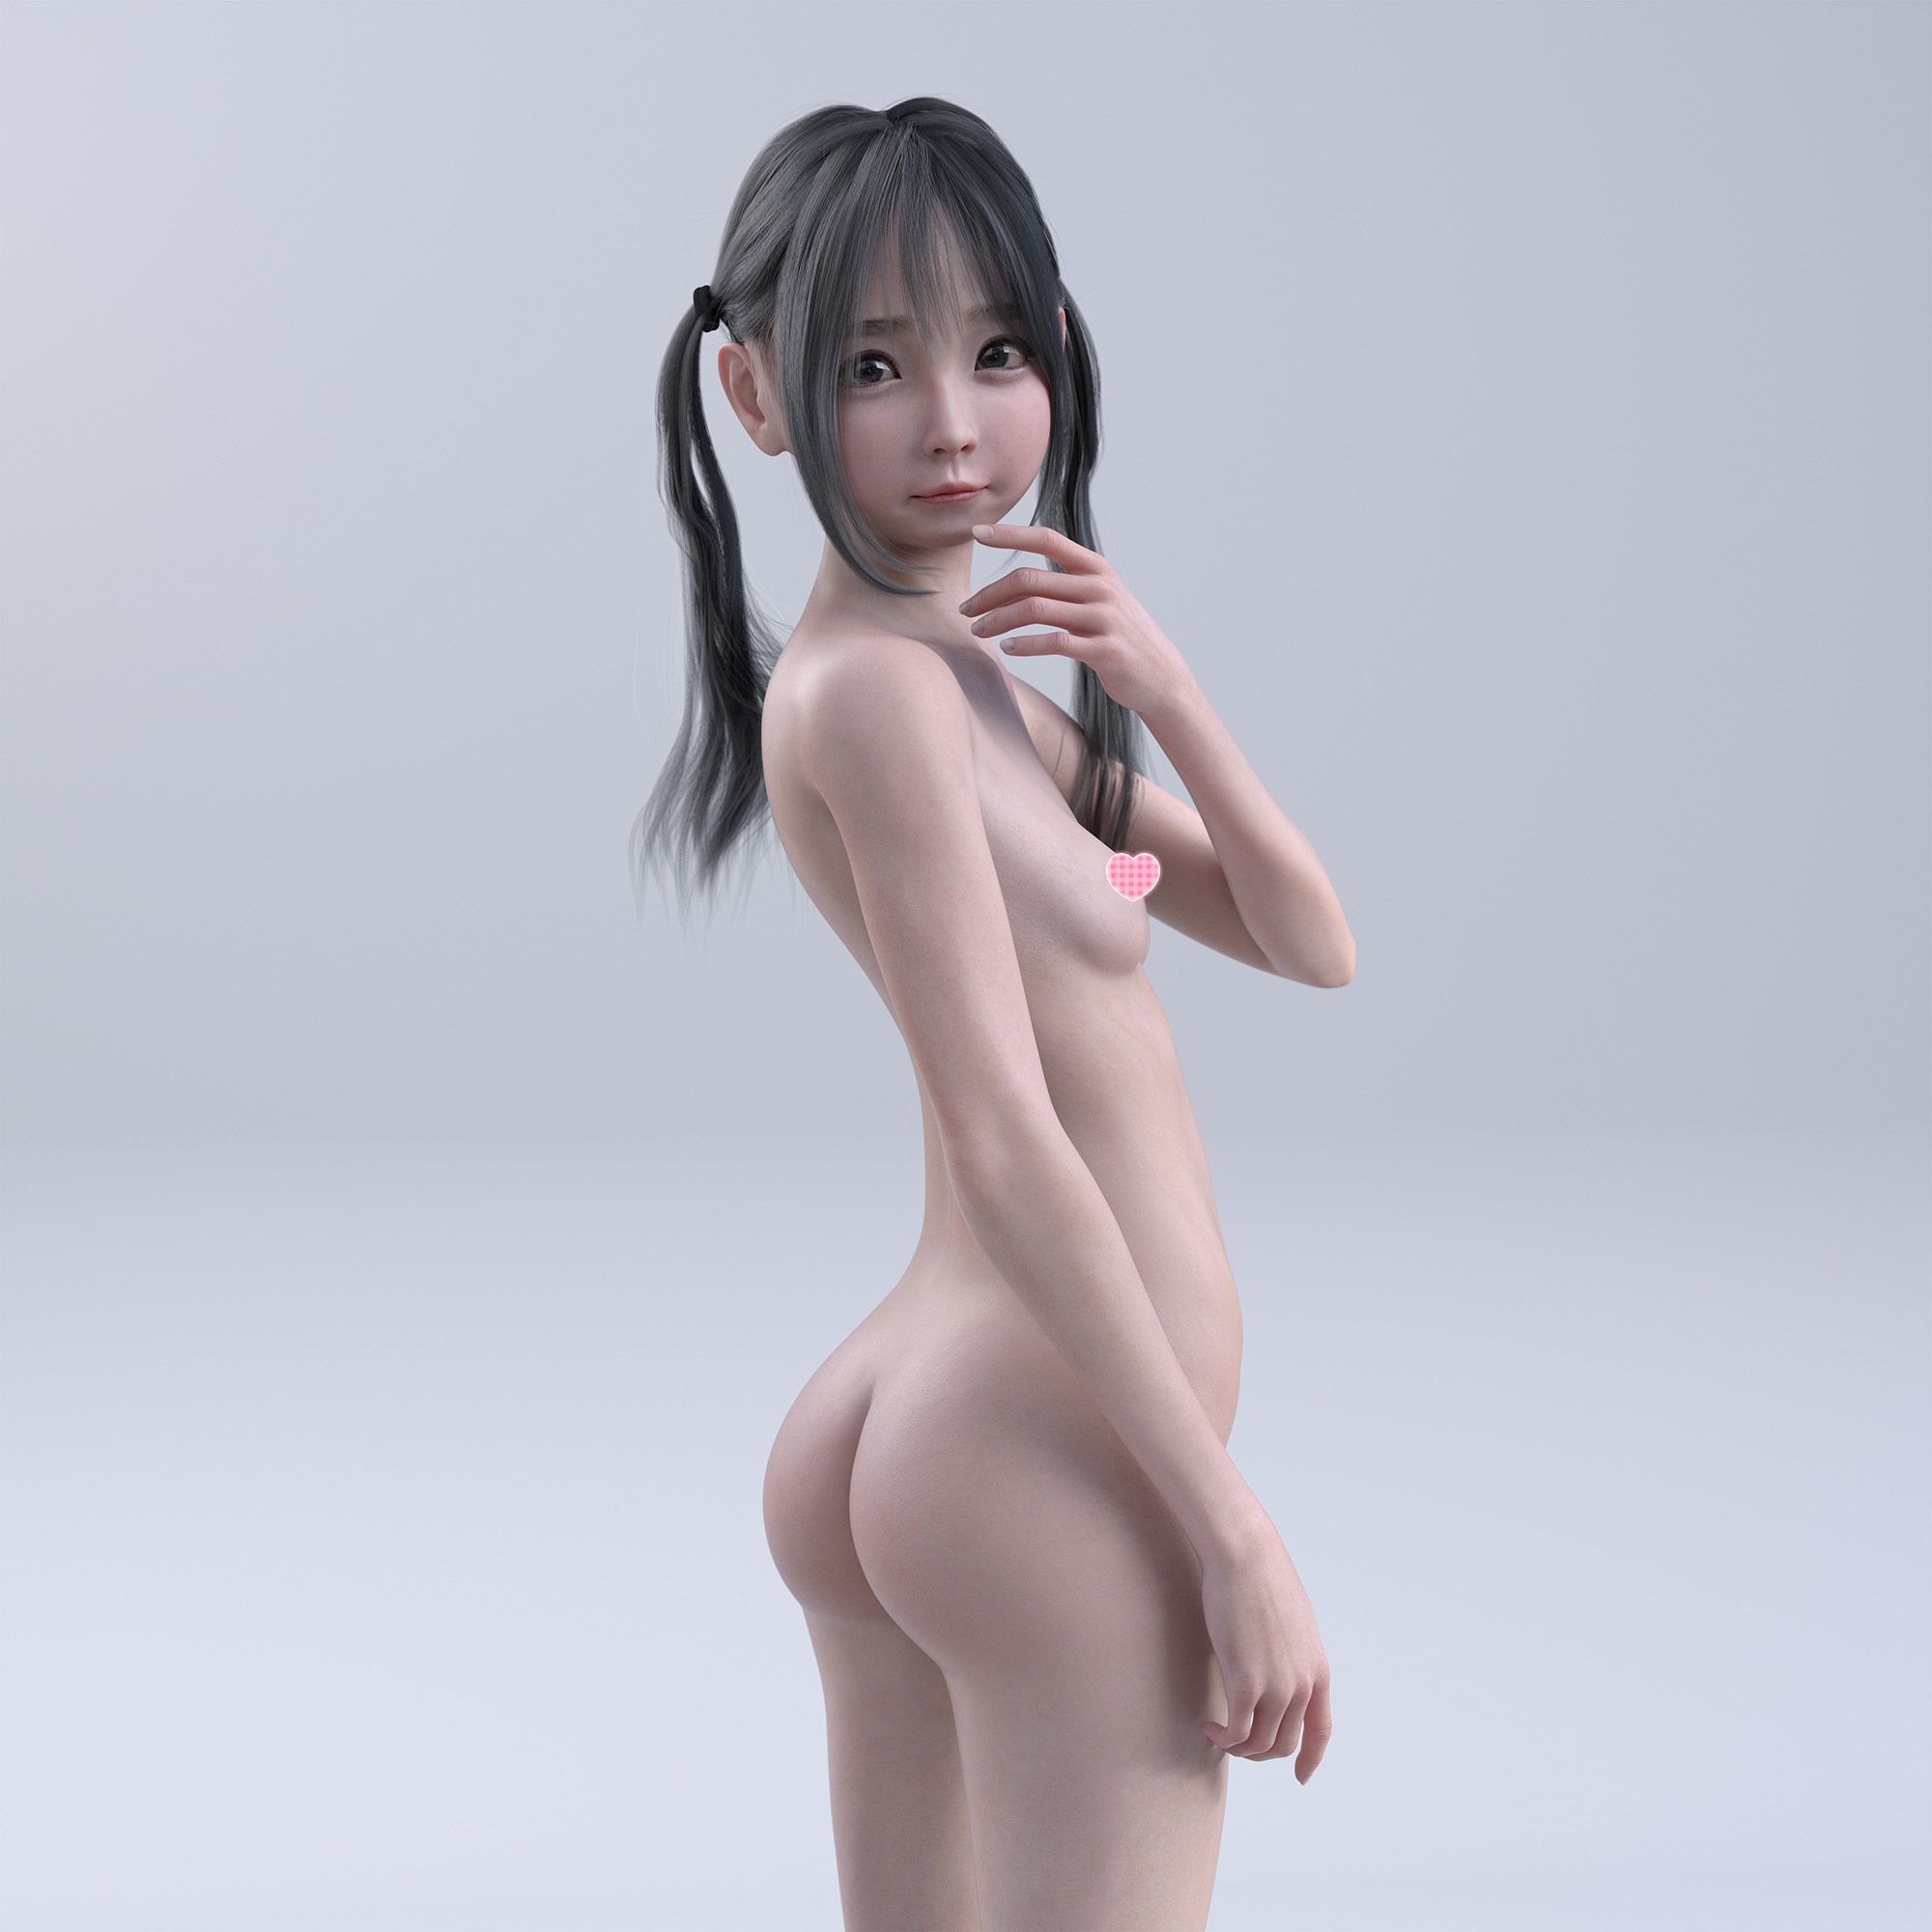 SWEET MEMORY - nude photo book - Model MIYU Vol.3【スイートメモリー ヌードフォトブック】7